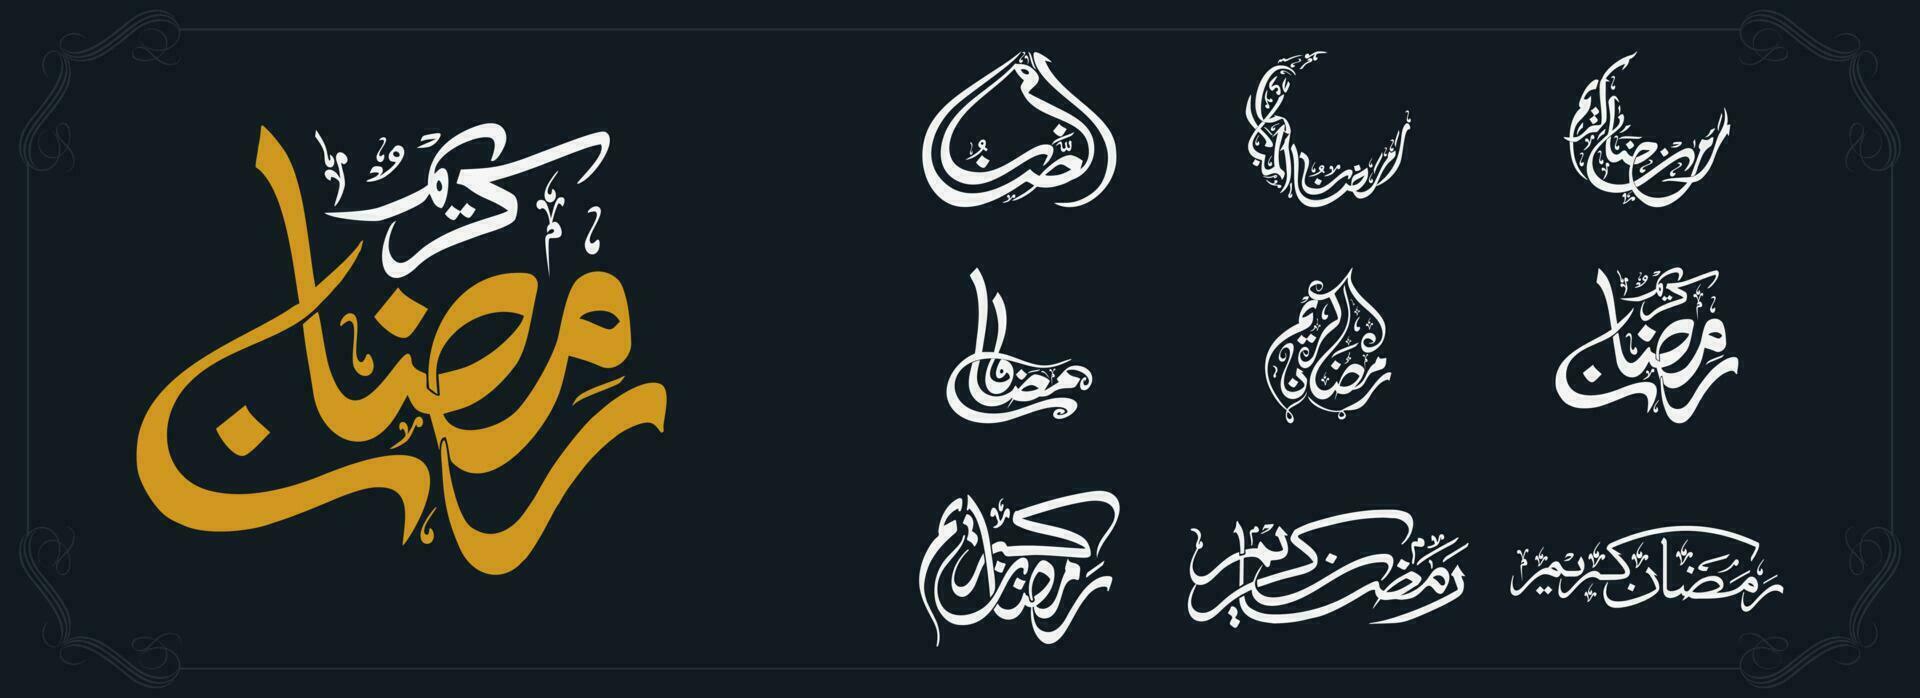 conjunto do Ramadã kareem ramzan Mubarak caligrafia dentro árabe língua em azul fundo. vetor